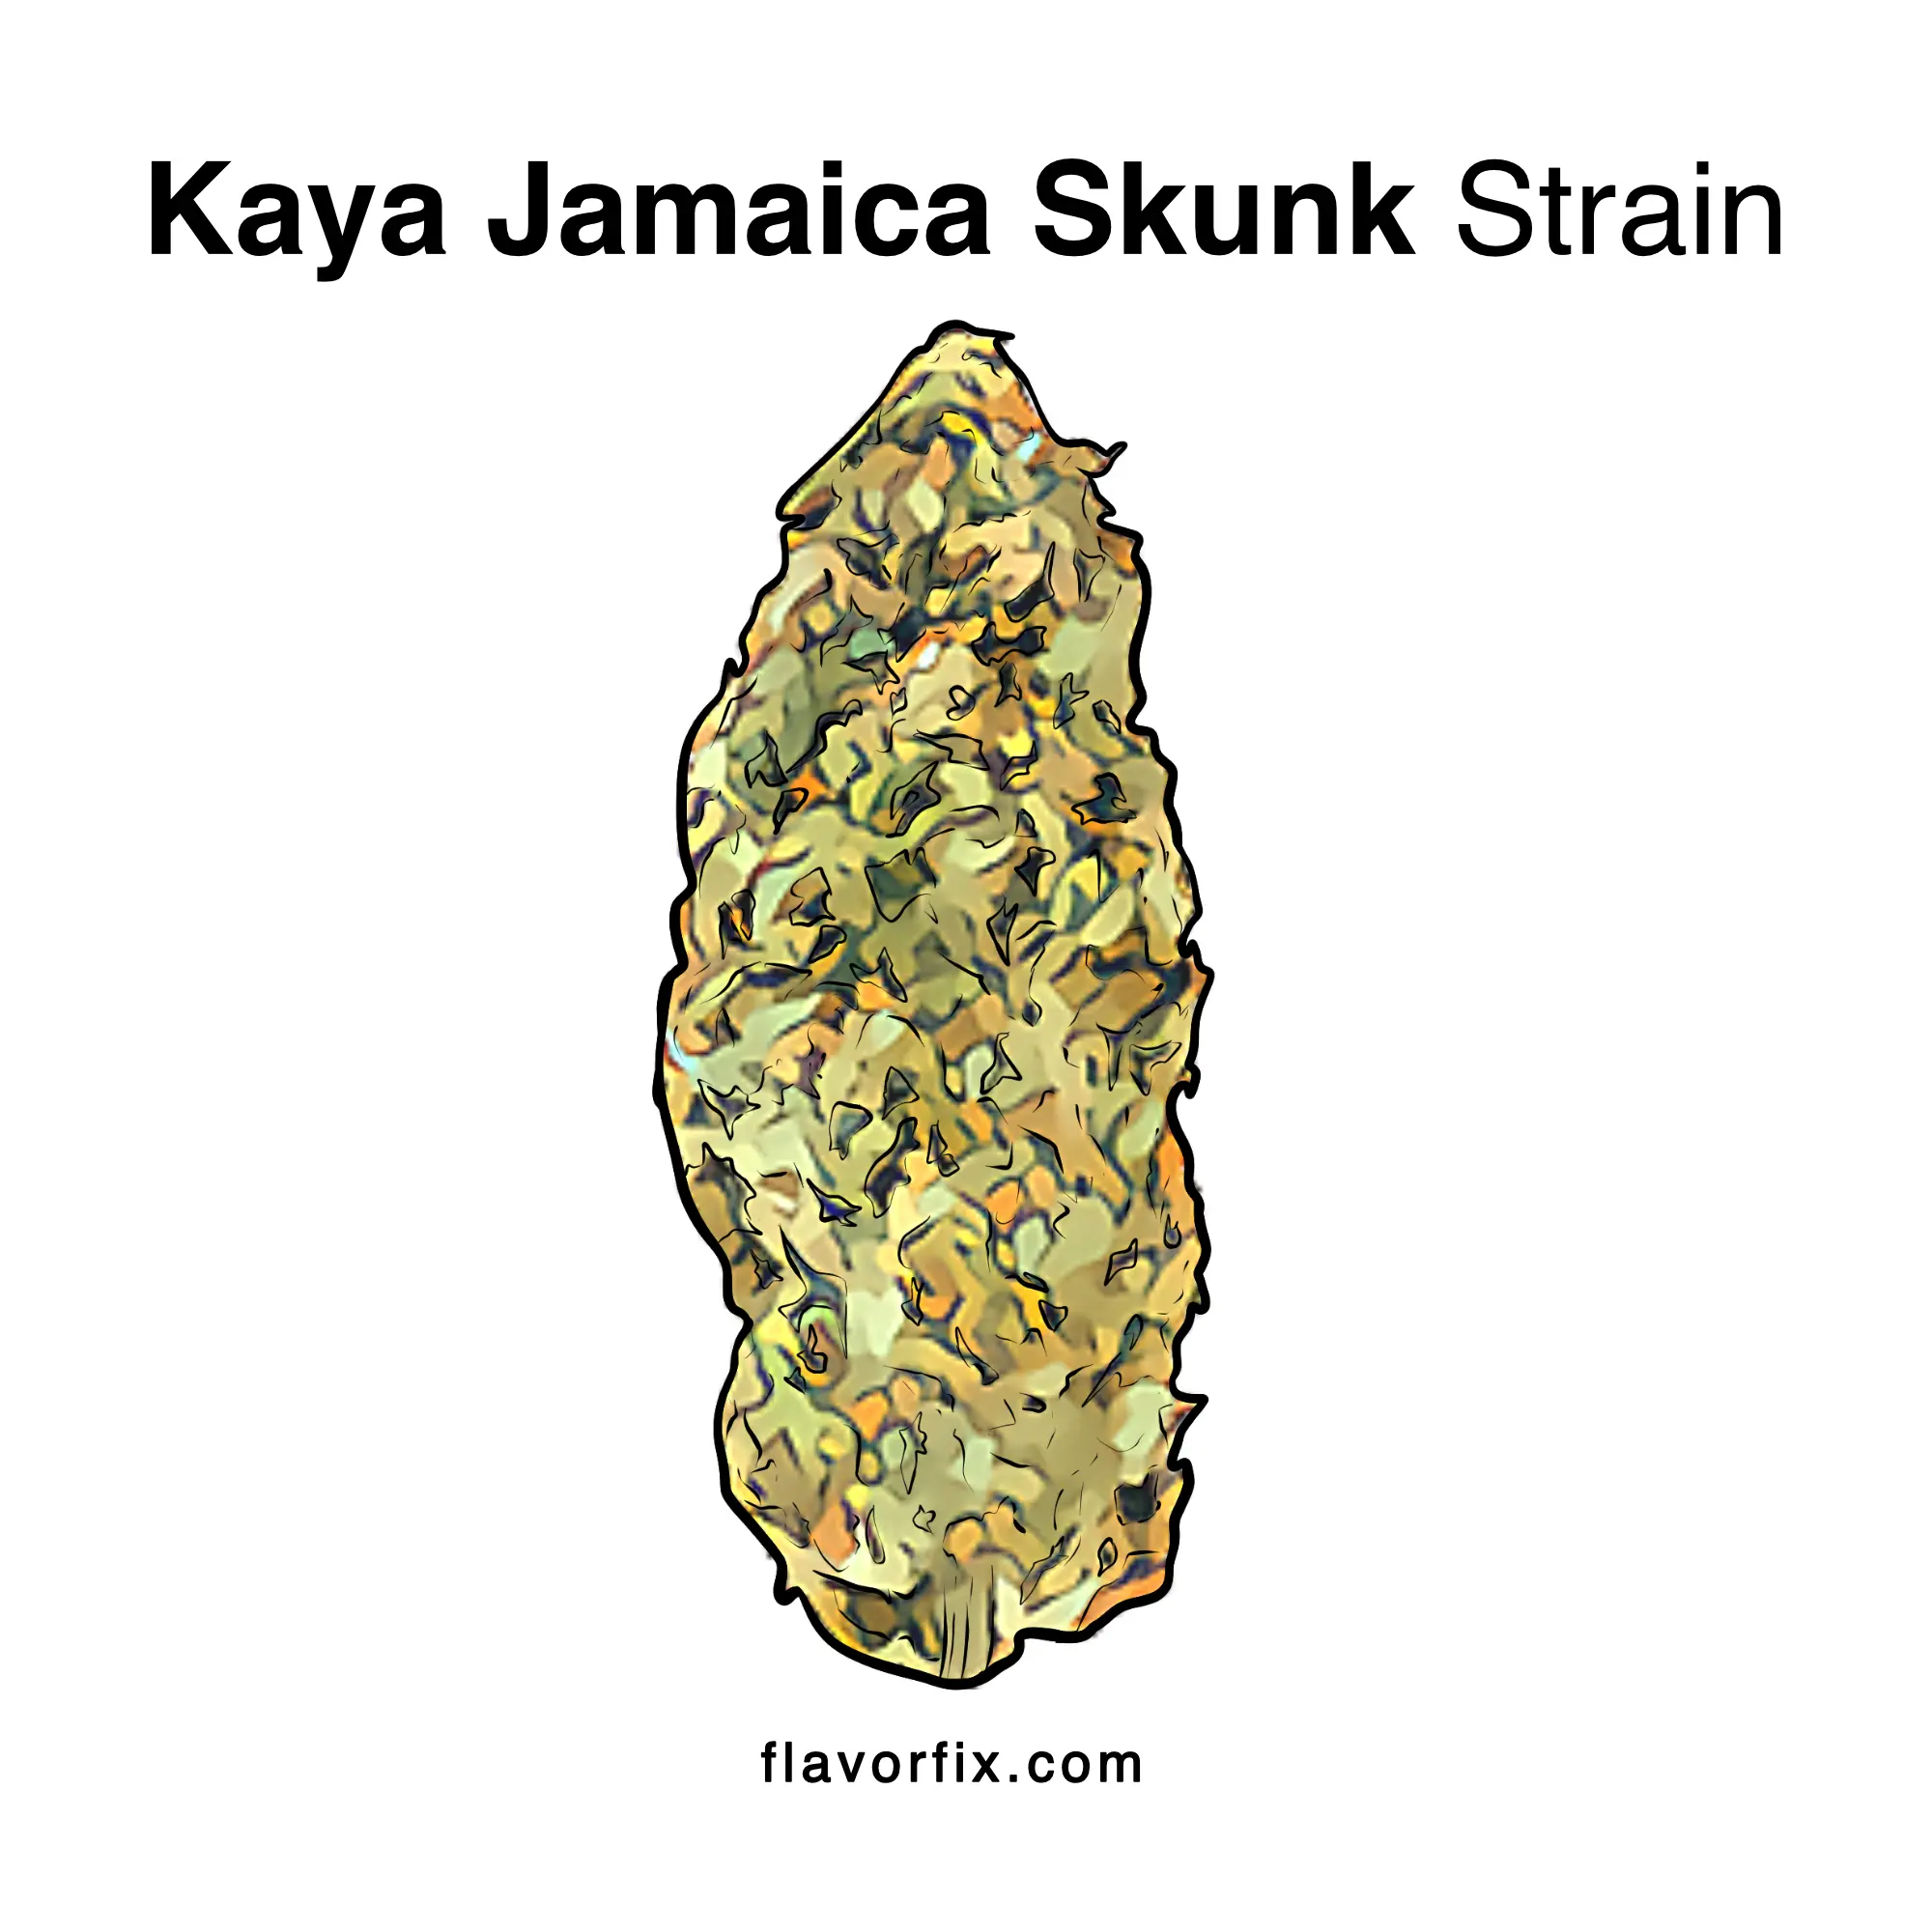 Kaya Jamaica Skunk Strain